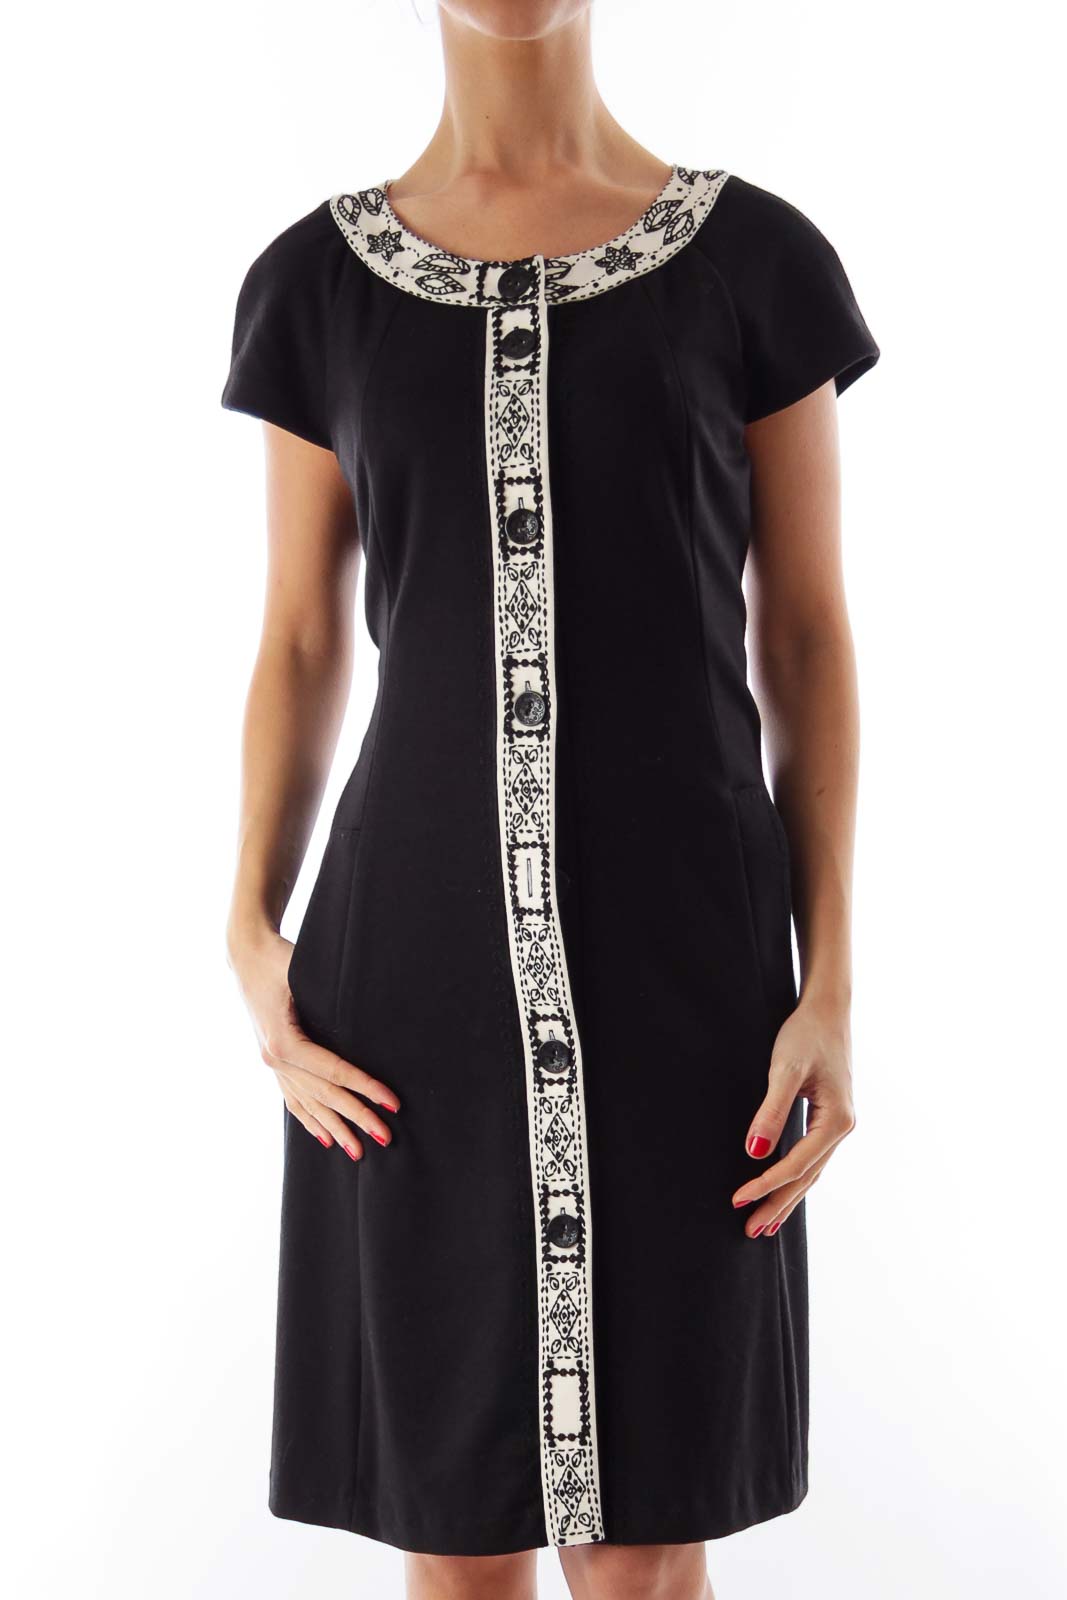 Black & White Detail Trim Dress Front